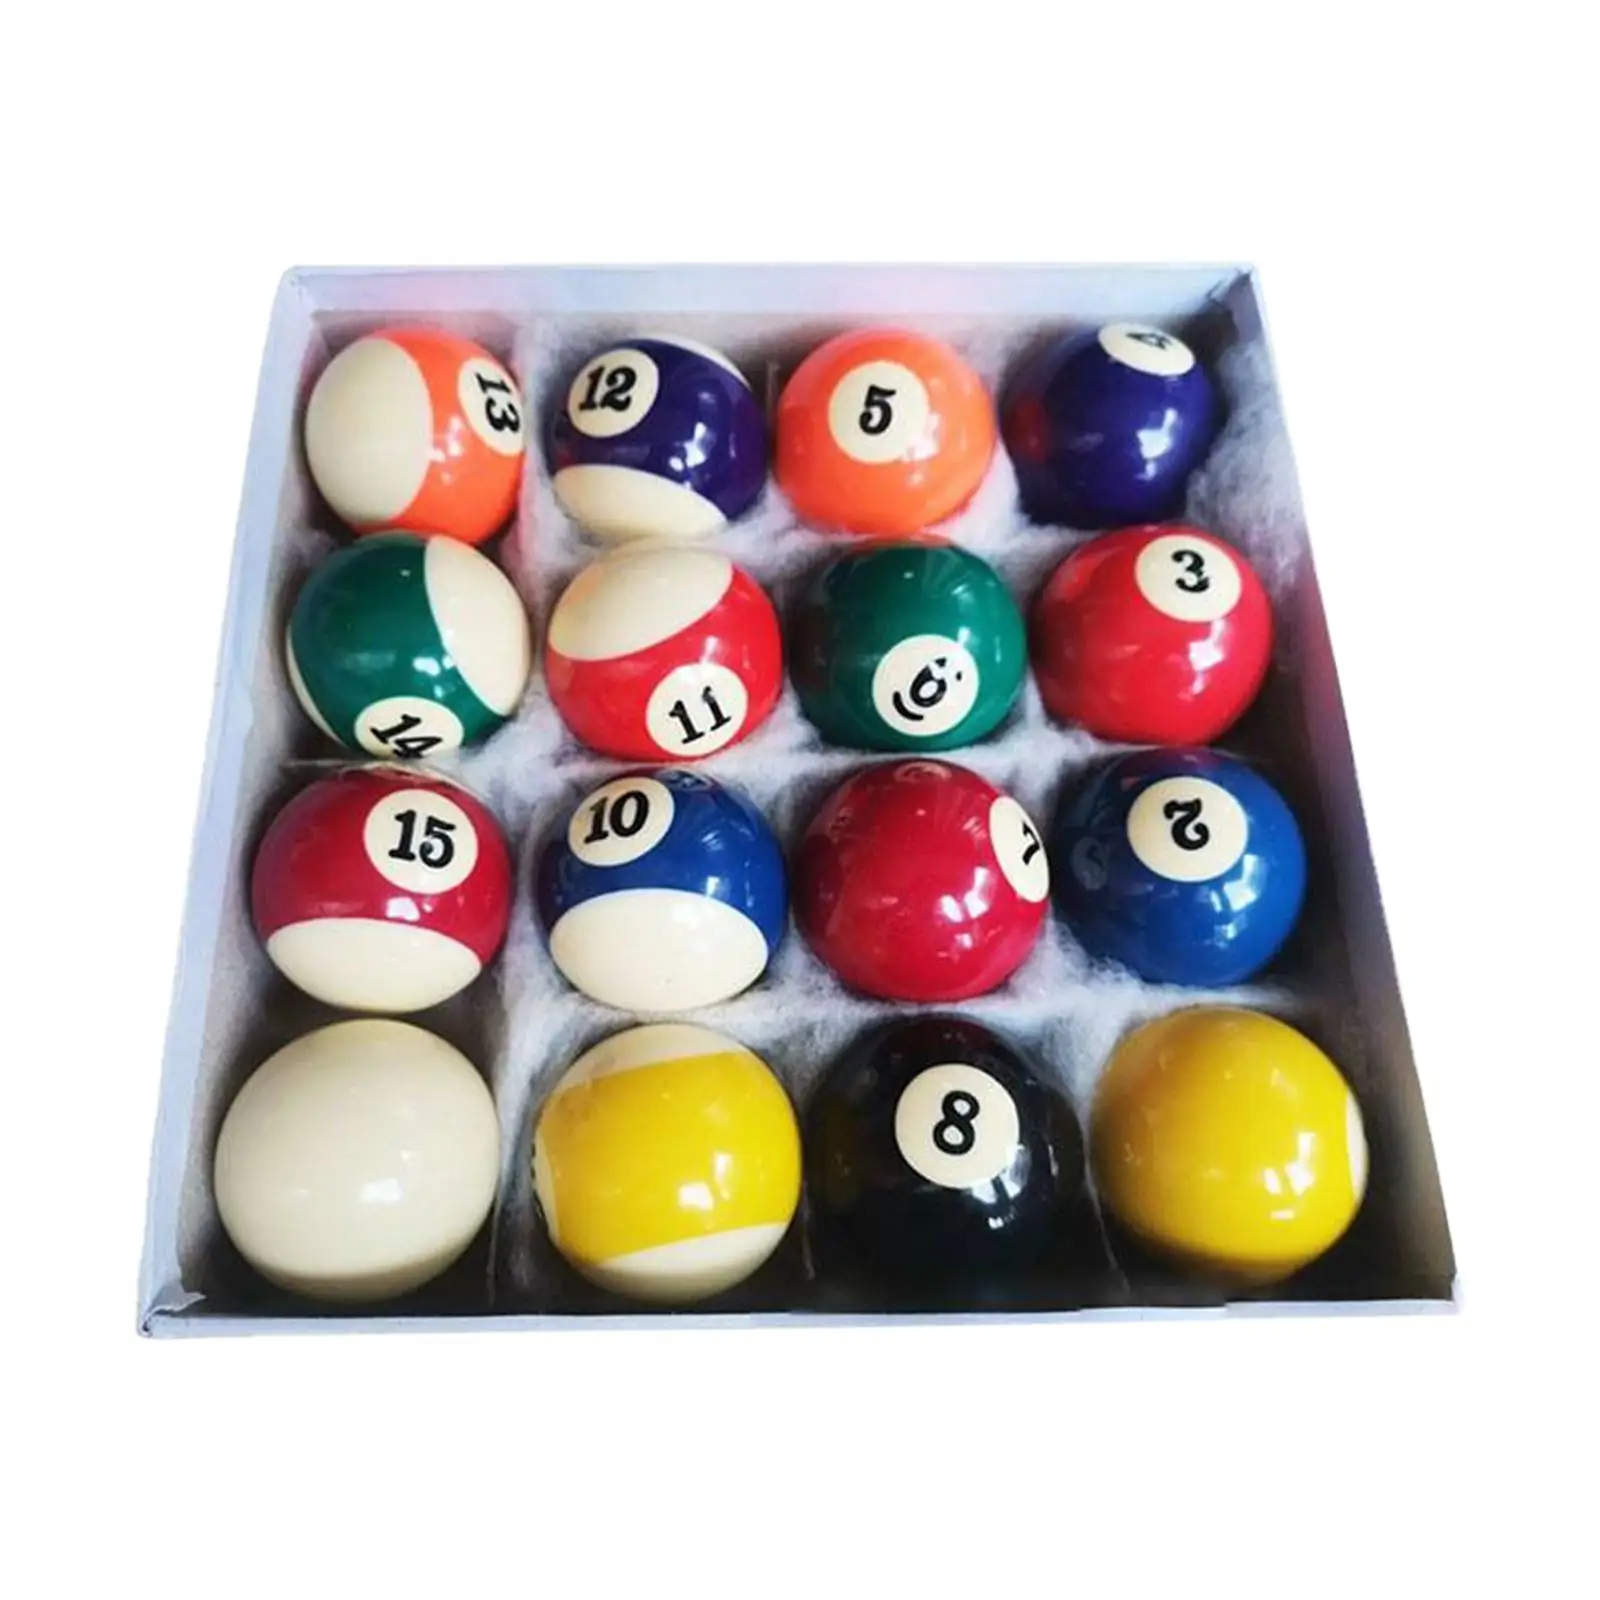 16x Billiard Balls Set Pool Balls American Billiard Balls Complete 16 Balls for Pool Tables for Home